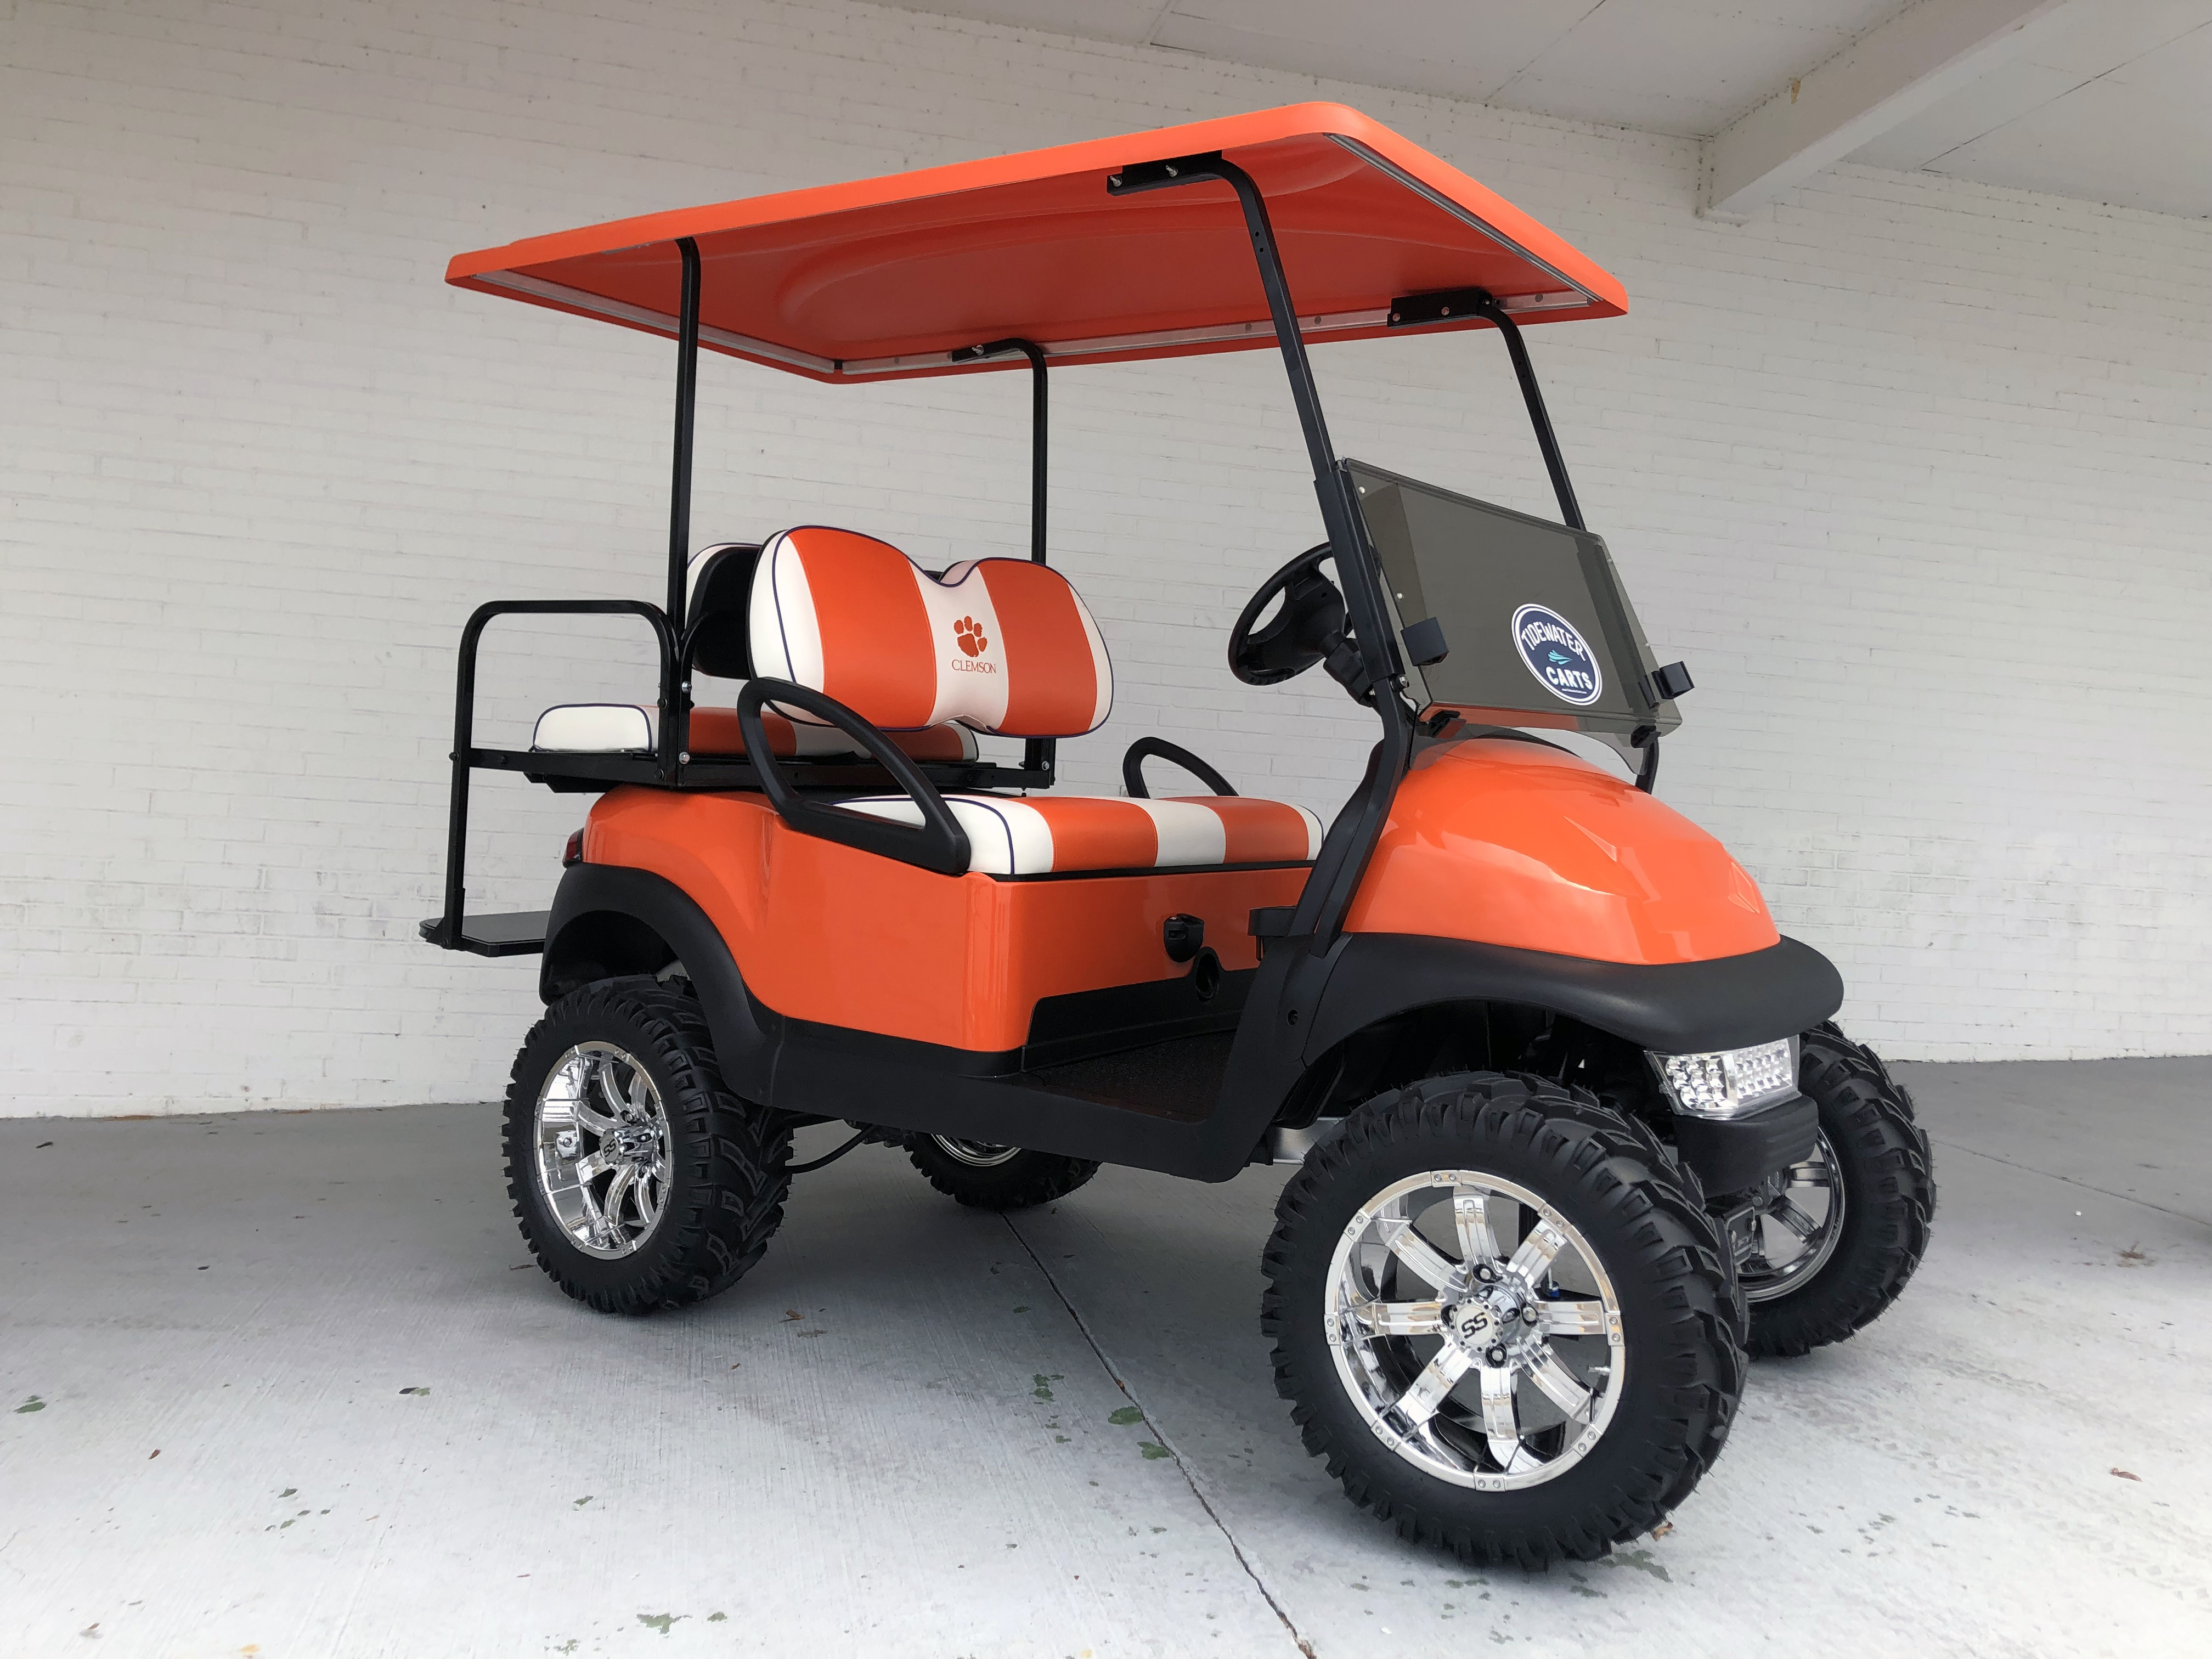 Clemson Lifted Club Car Precedent Golf Cart